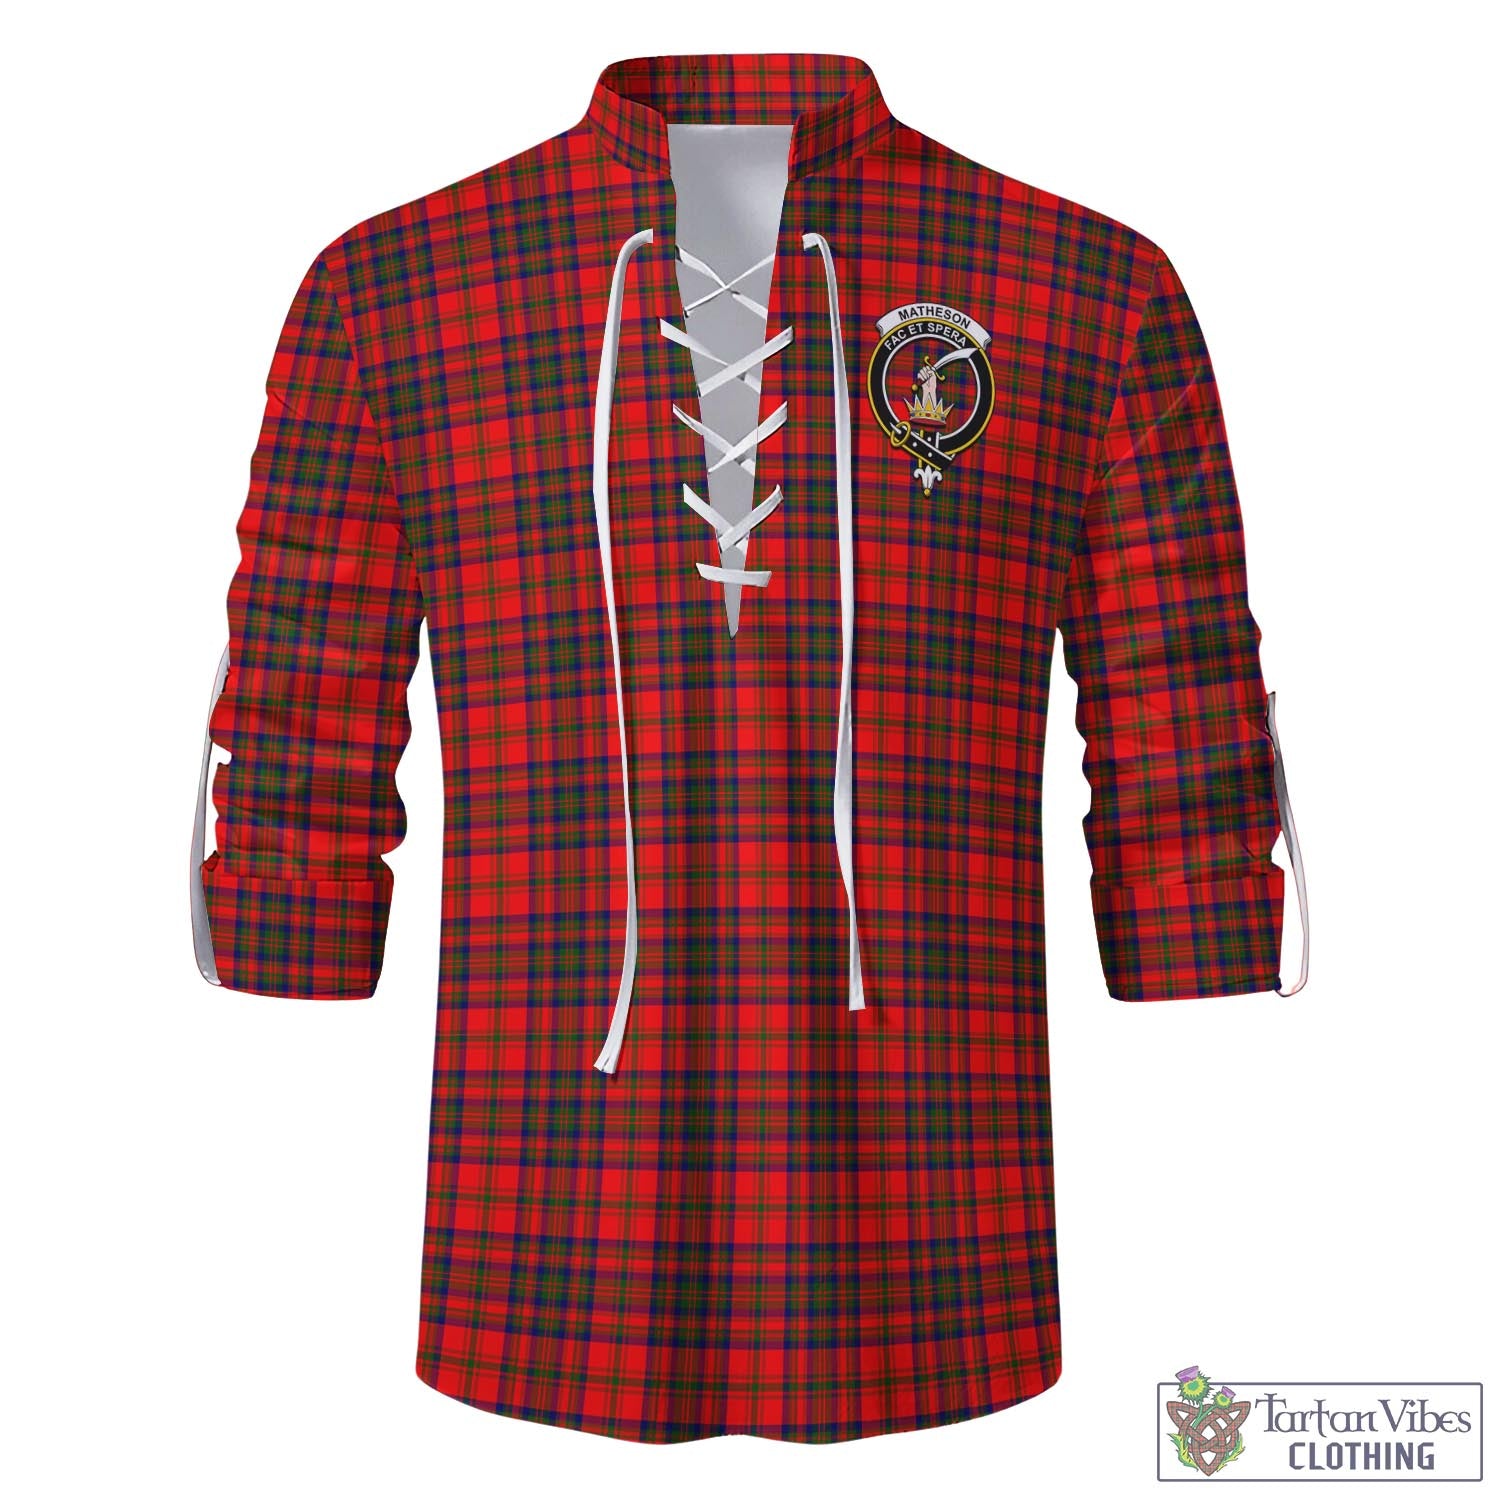 Tartan Vibes Clothing Matheson Modern Tartan Men's Scottish Traditional Jacobite Ghillie Kilt Shirt with Family Crest